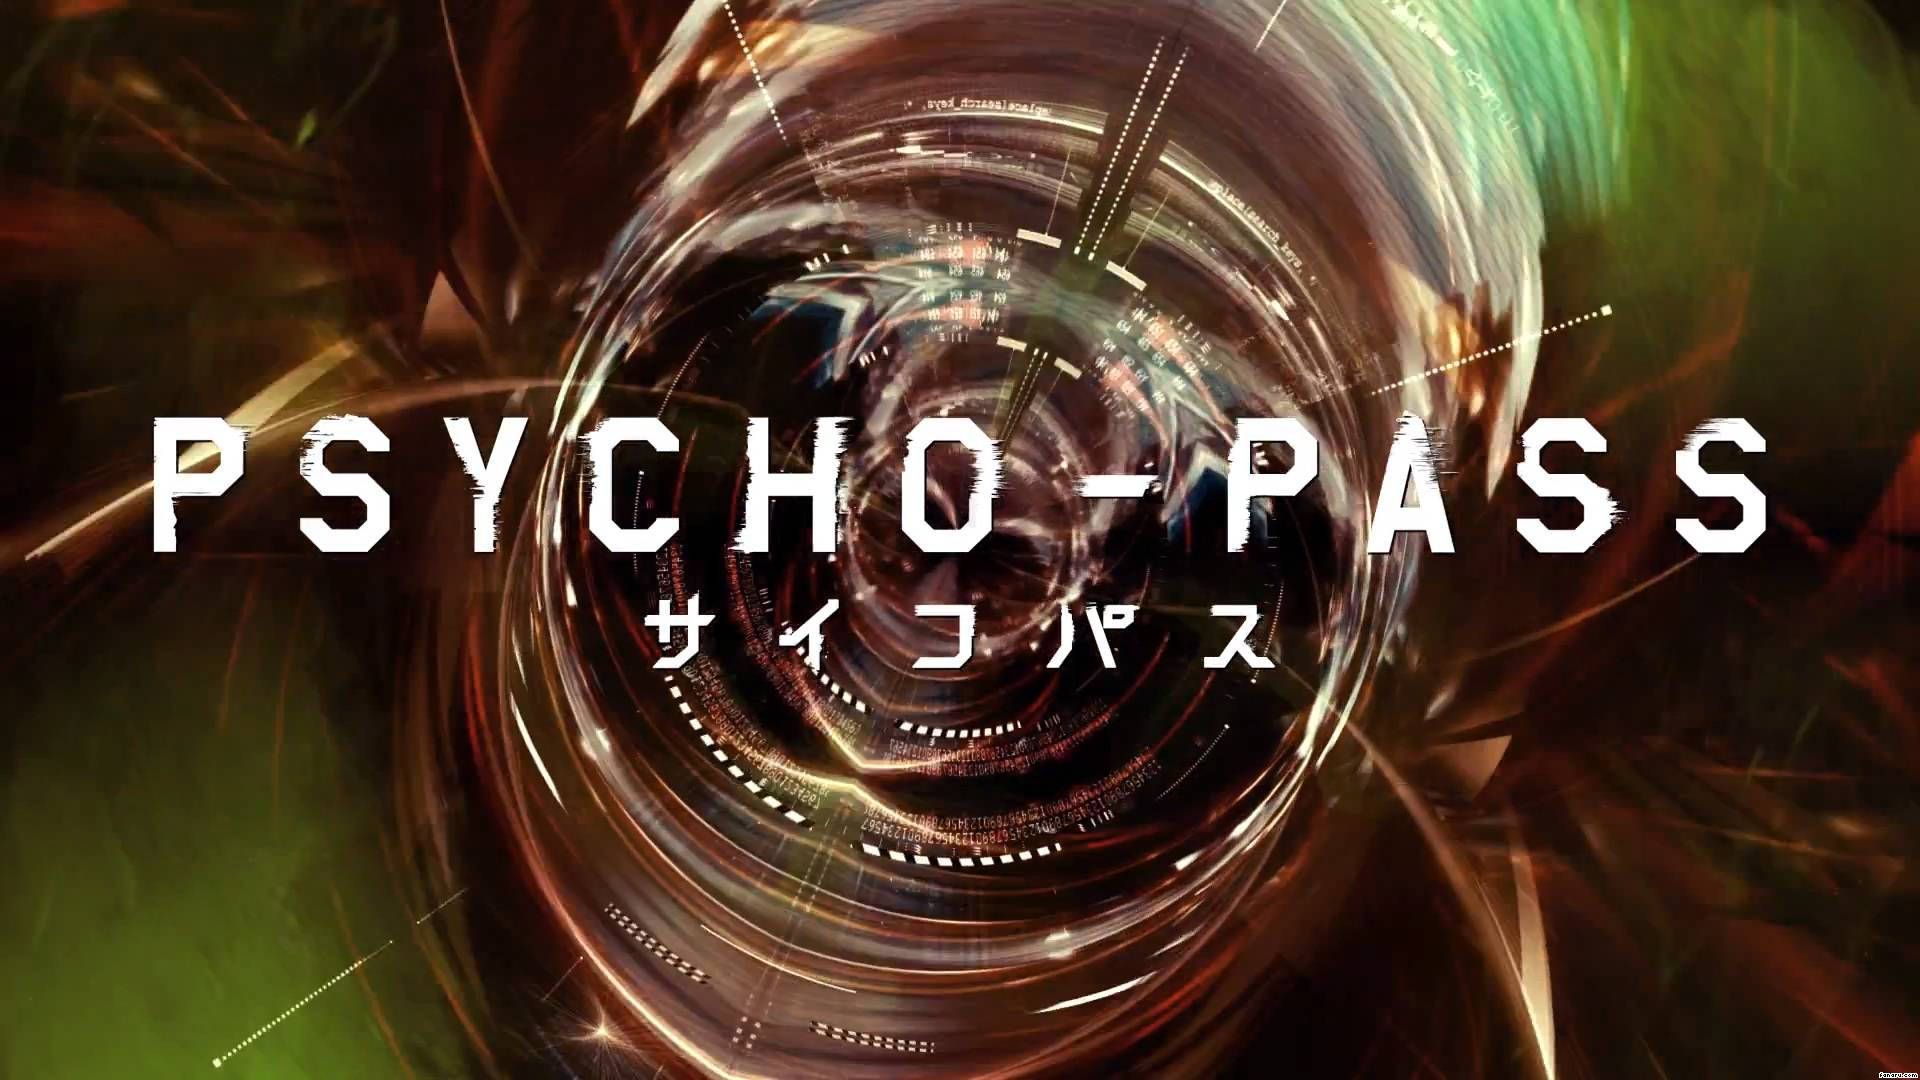 Psycho Pass Digital Art Background